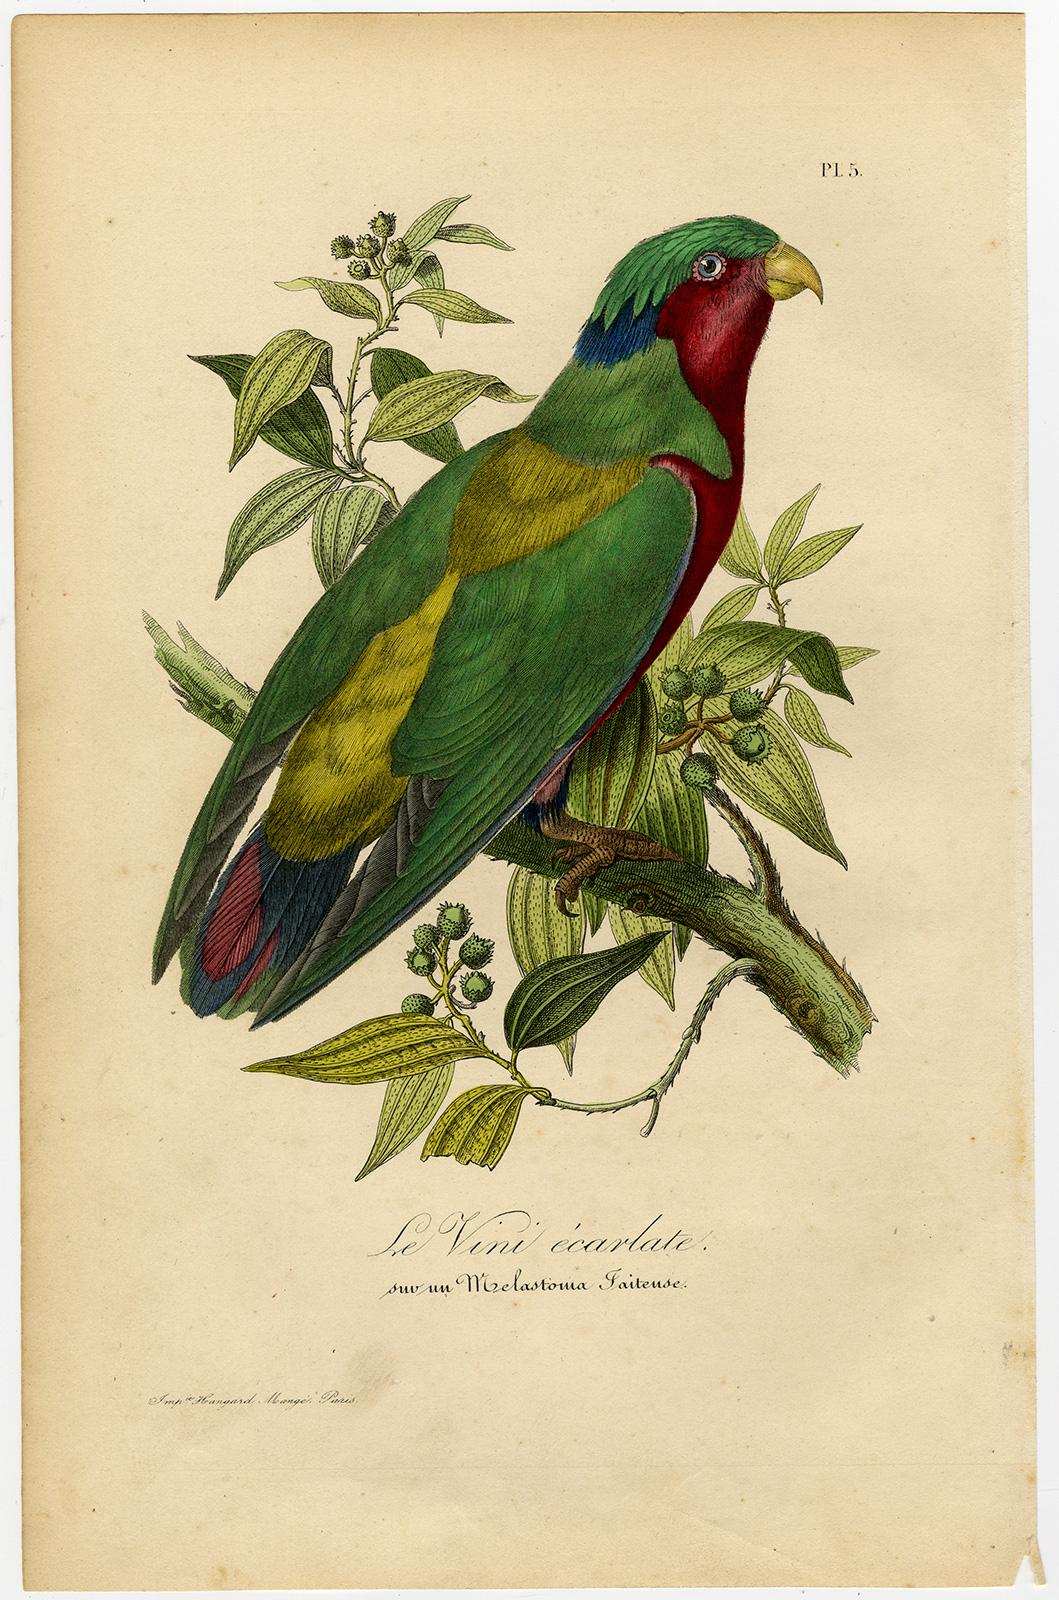 Antique print of a parrot - Le Vini ecarlate by Le Maout - Engraving - 19th c. - Print by Jean-Emmanuel-Marie Le Maout